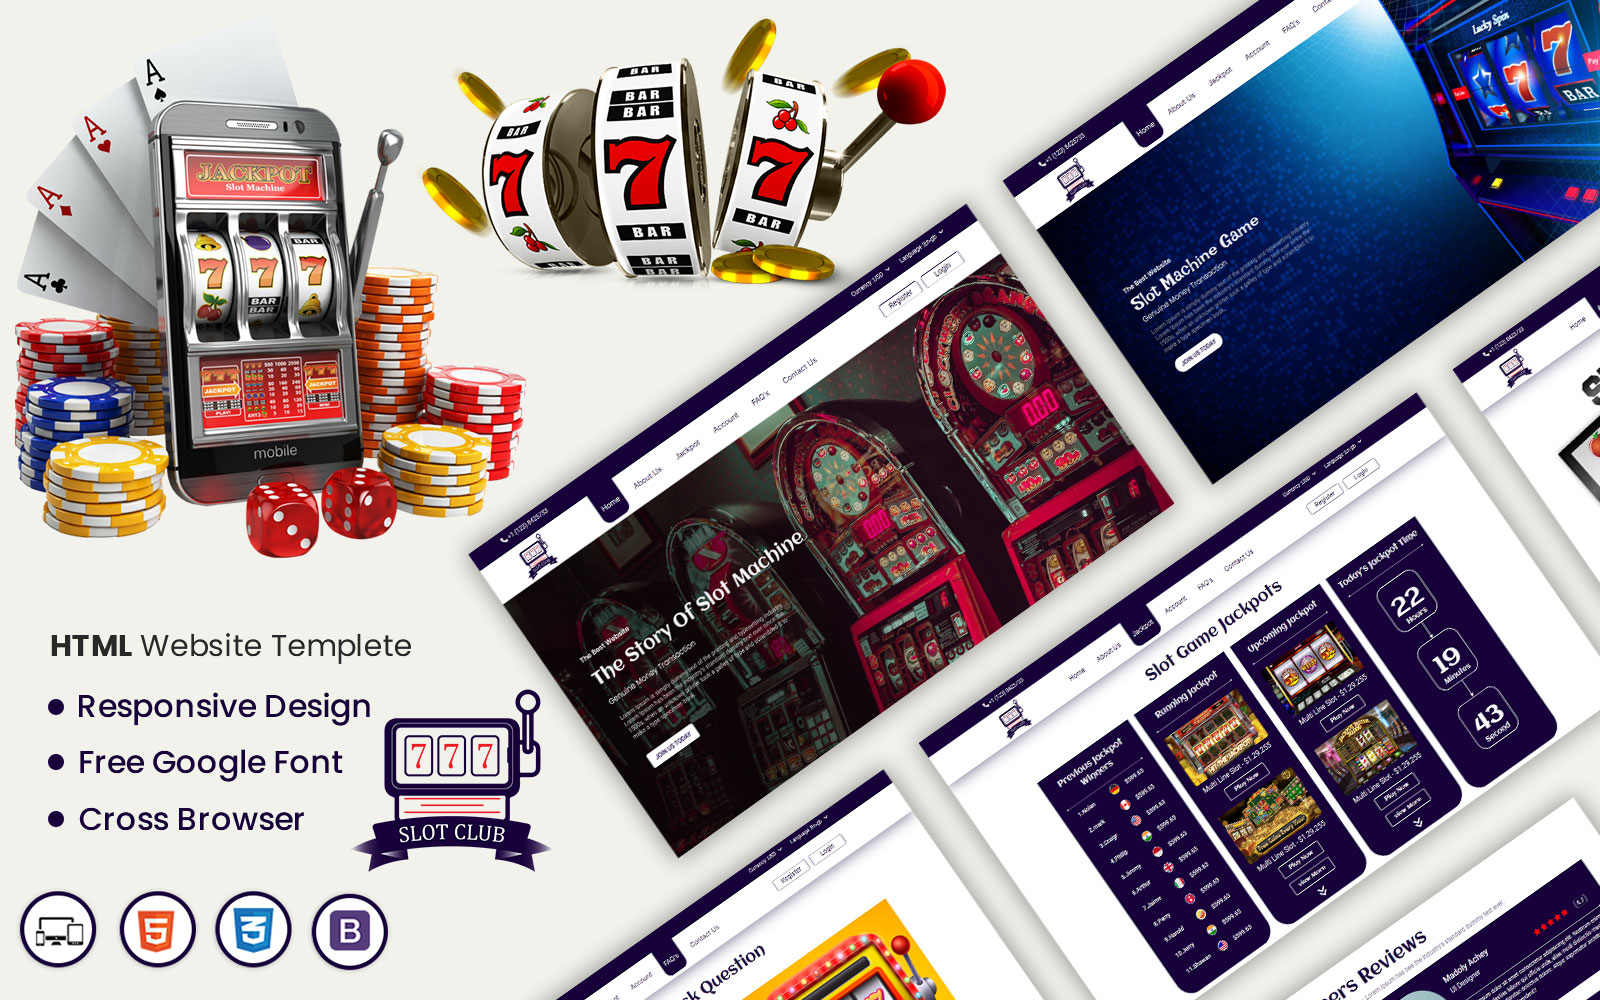 SlotClub - Premium HTML Template for Slot Machine Gaming Sites